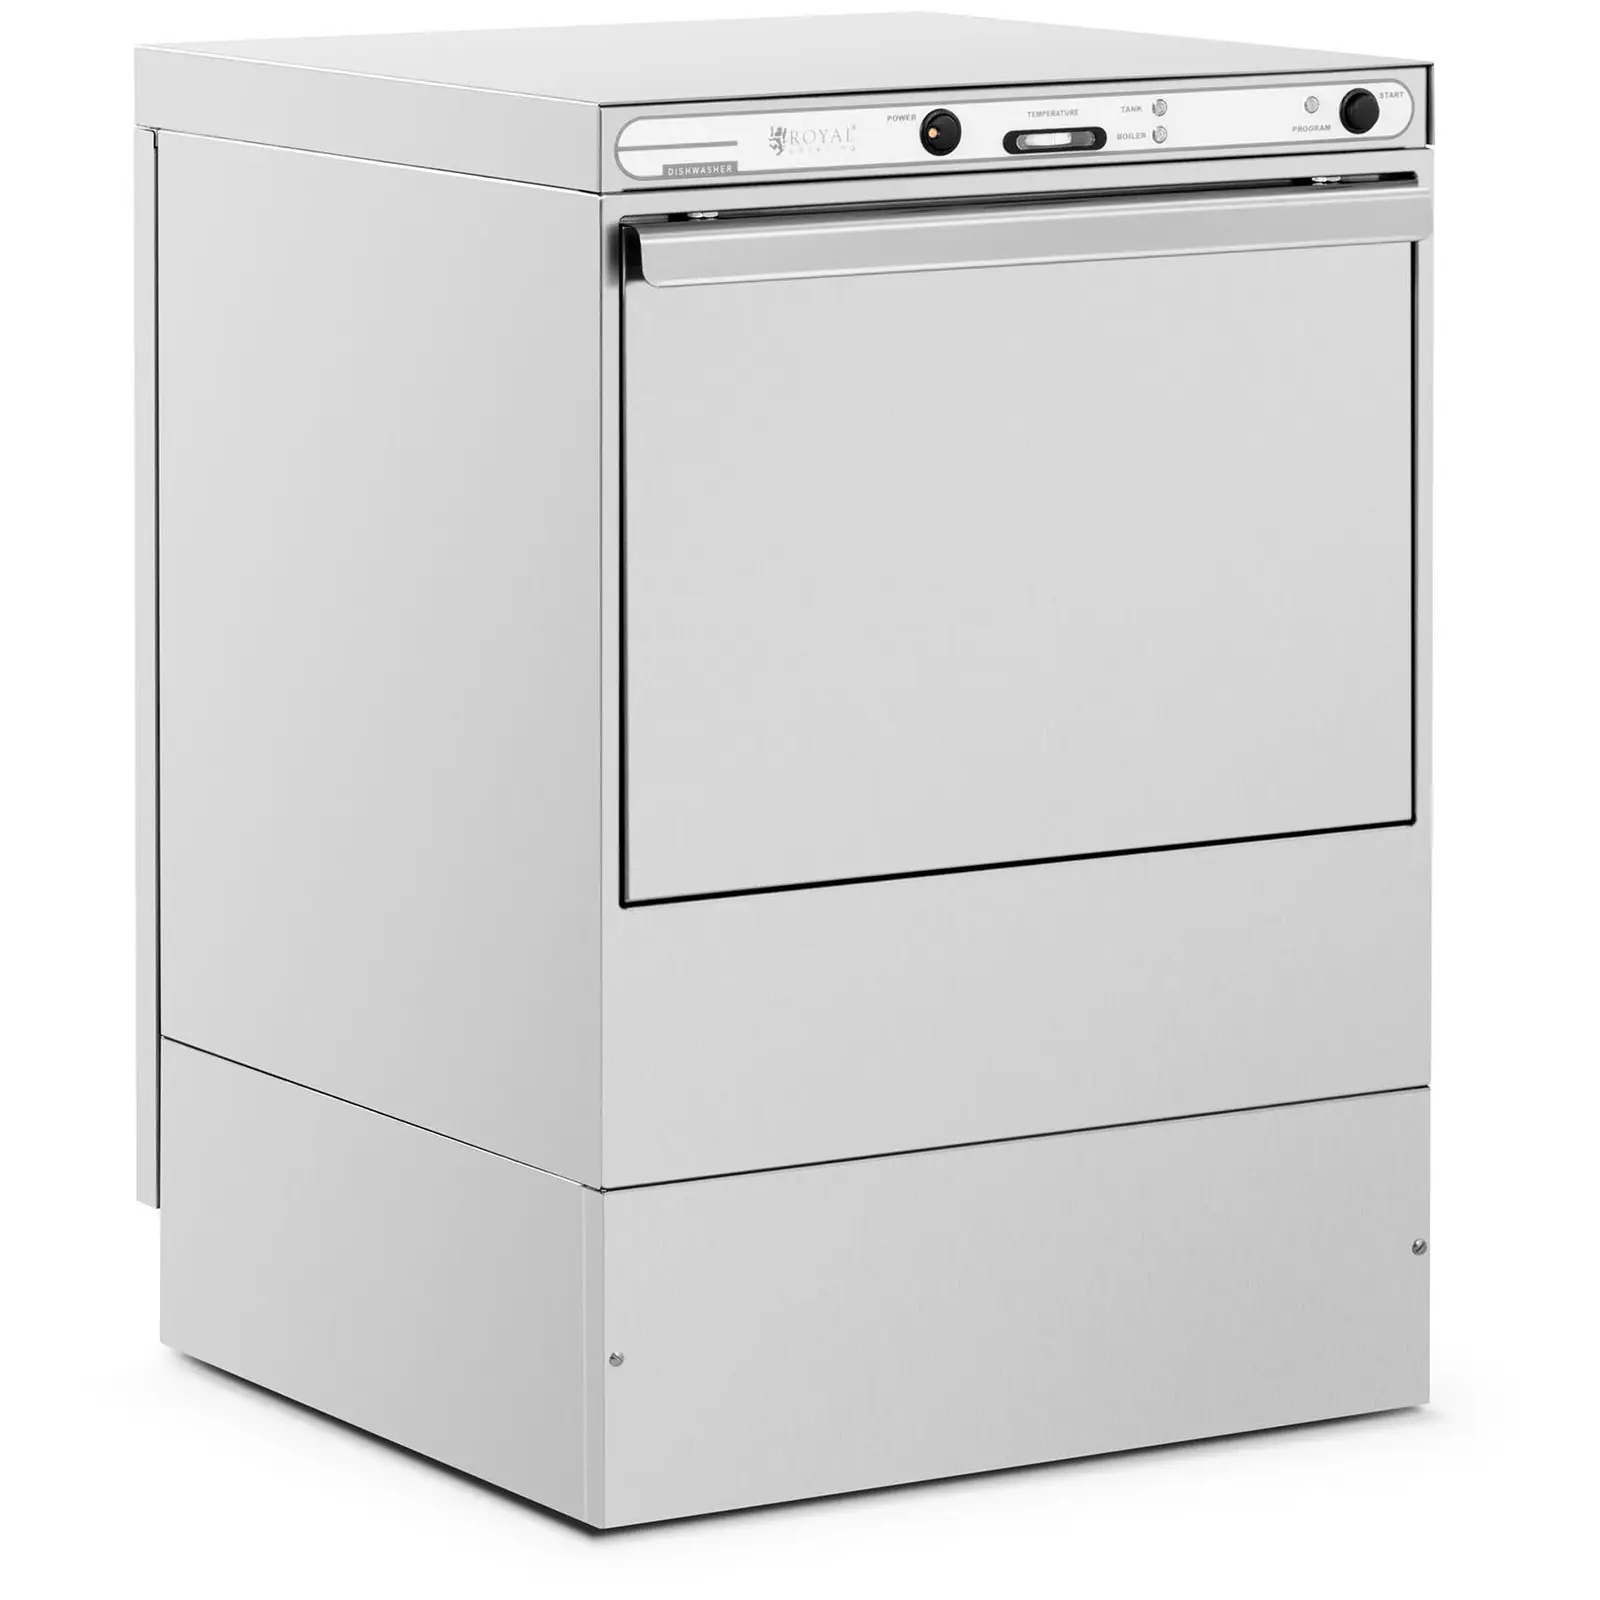 Máquina de lavar loiça - 6600 W - Royal Catering - aço inoxidável